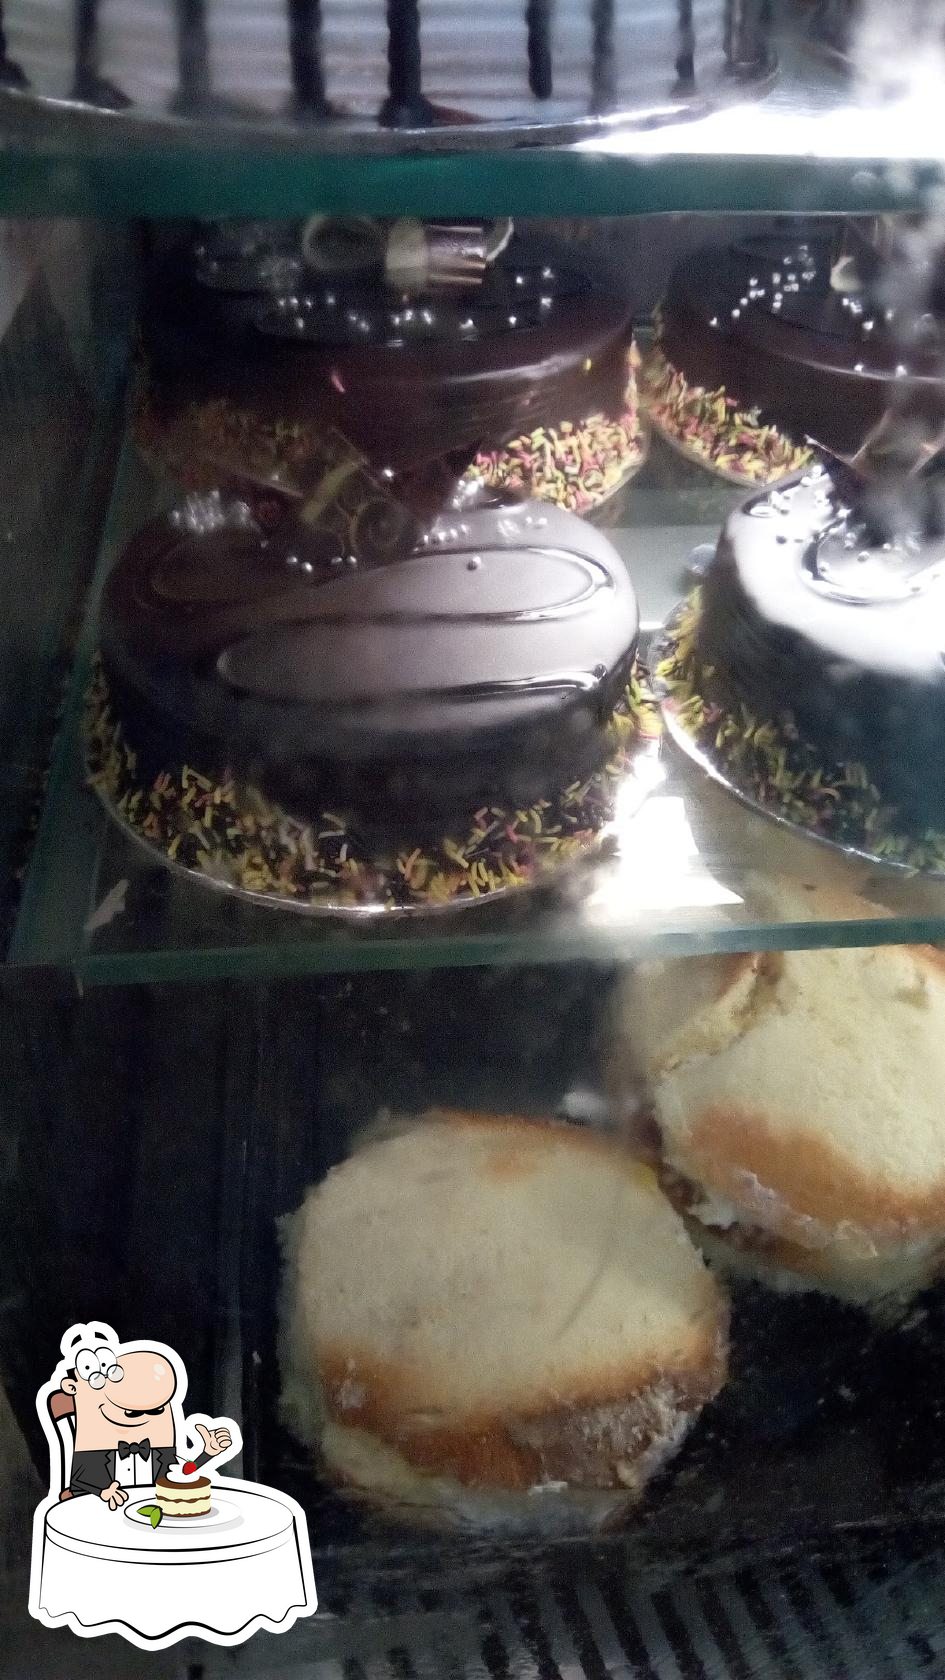 Cake Point in Munirka,Delhi - Best Cake Shops in Delhi - Justdial